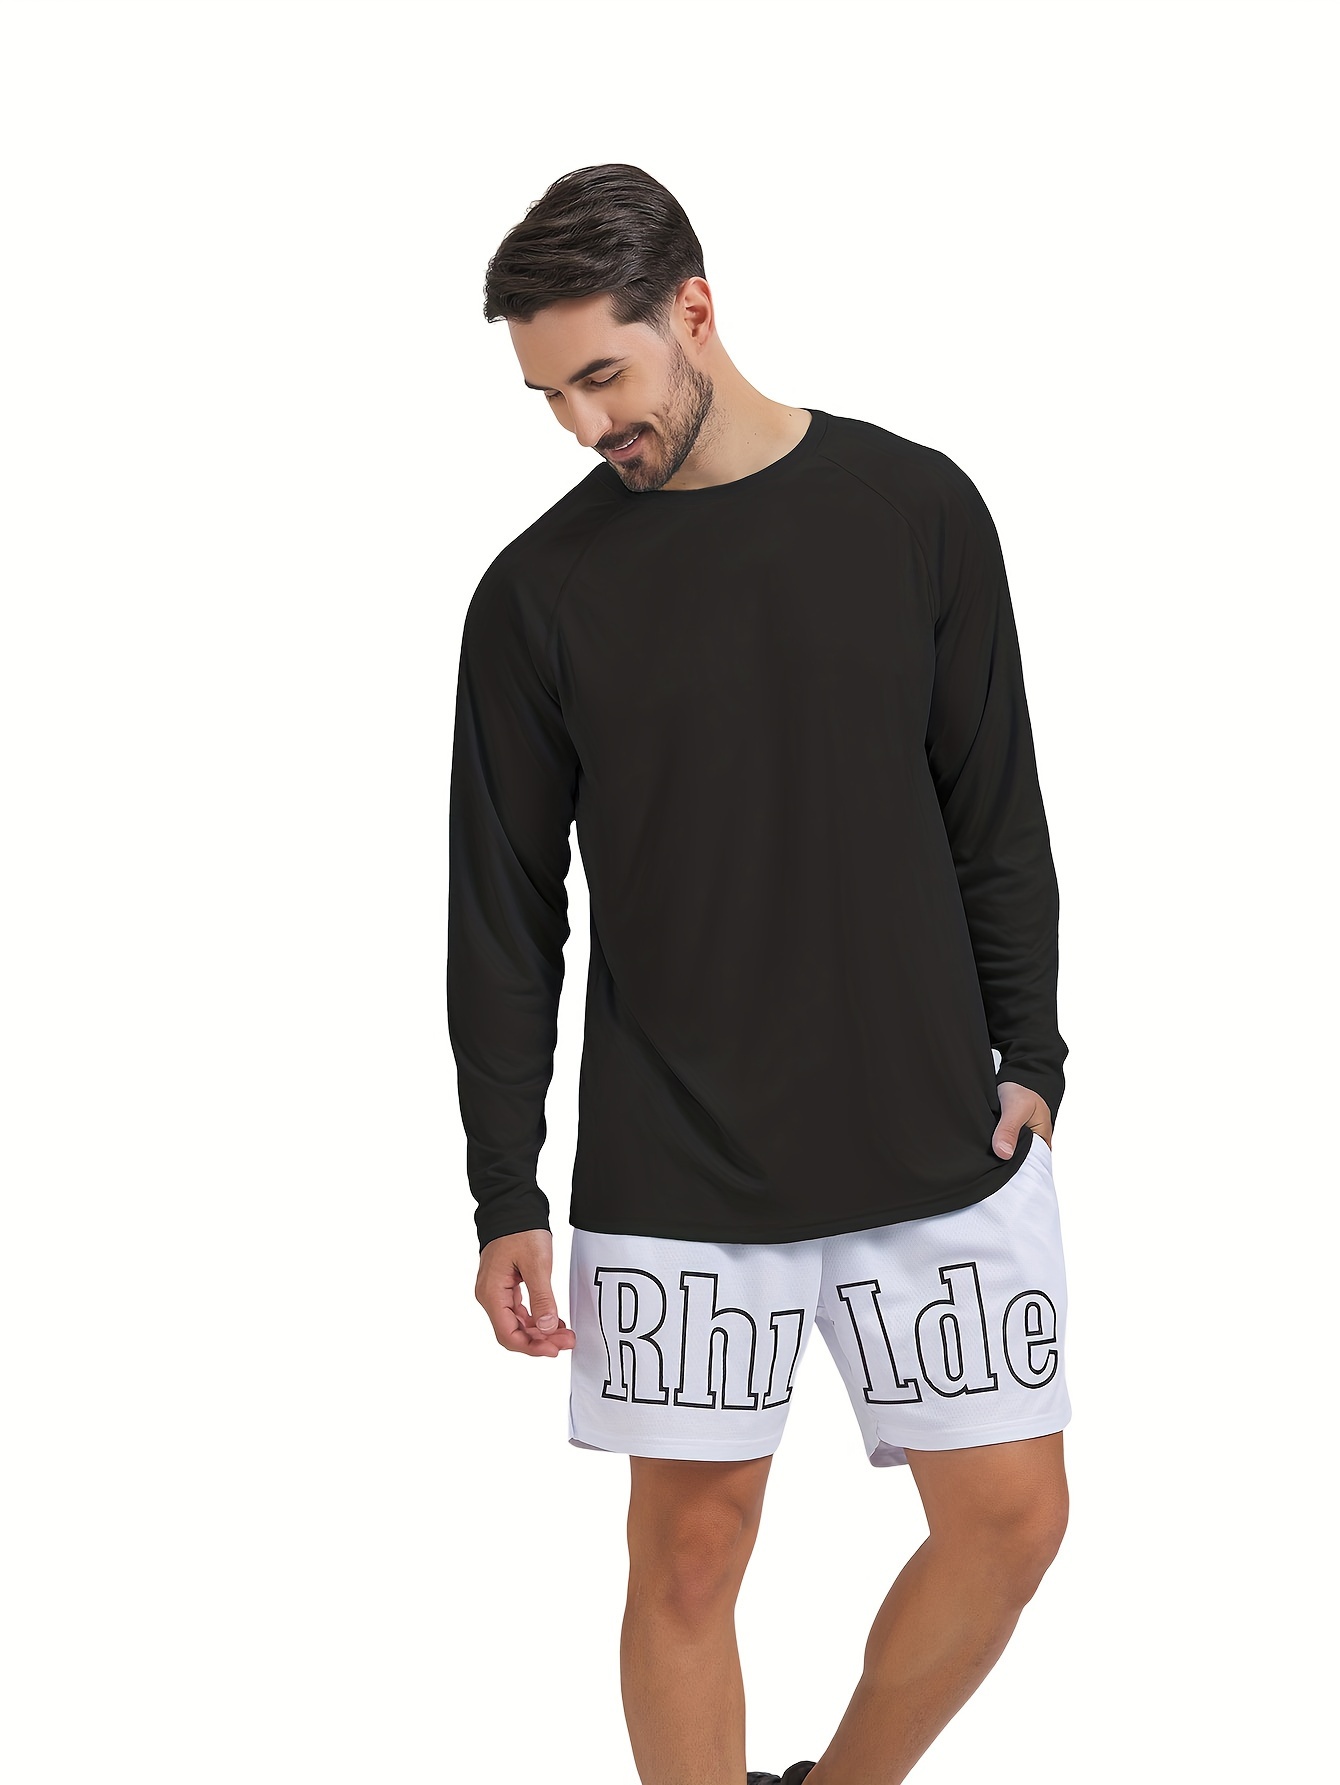 Men's Upf 50+ Sun Protection Long Sleeve T shirt Comfy Quick